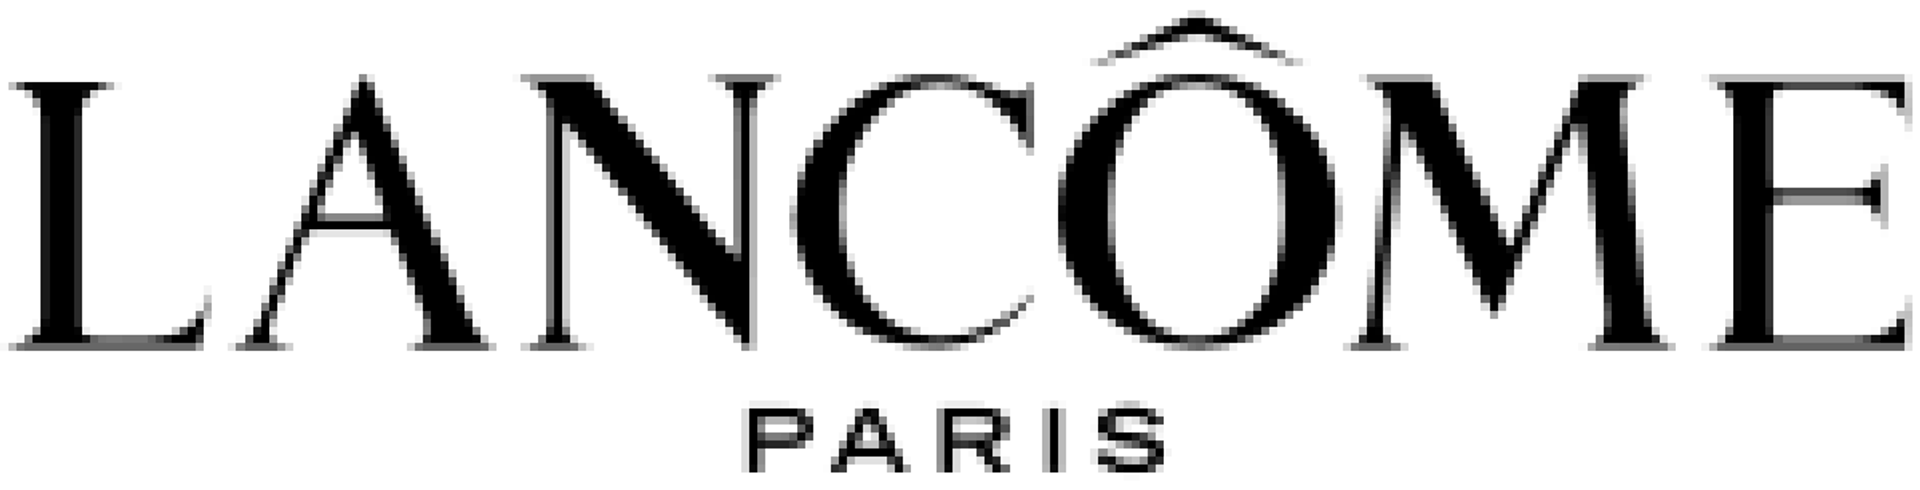 LANCOME logo de circulaires